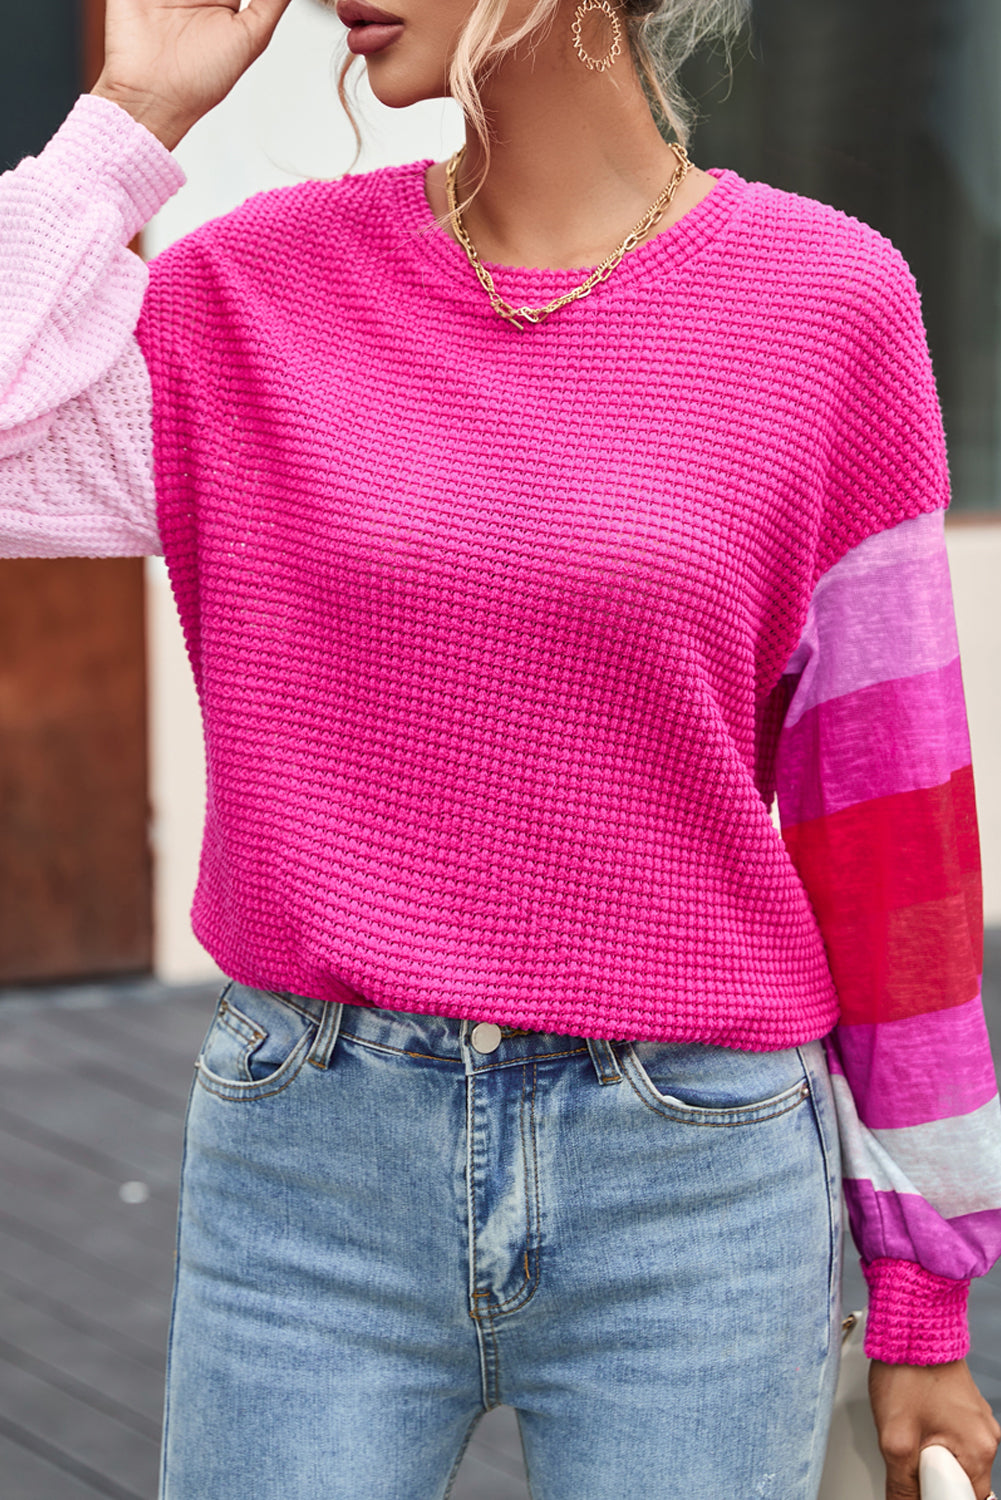 Ružičasto vafel pletivo u boji patchwork majica spuštenih ramena